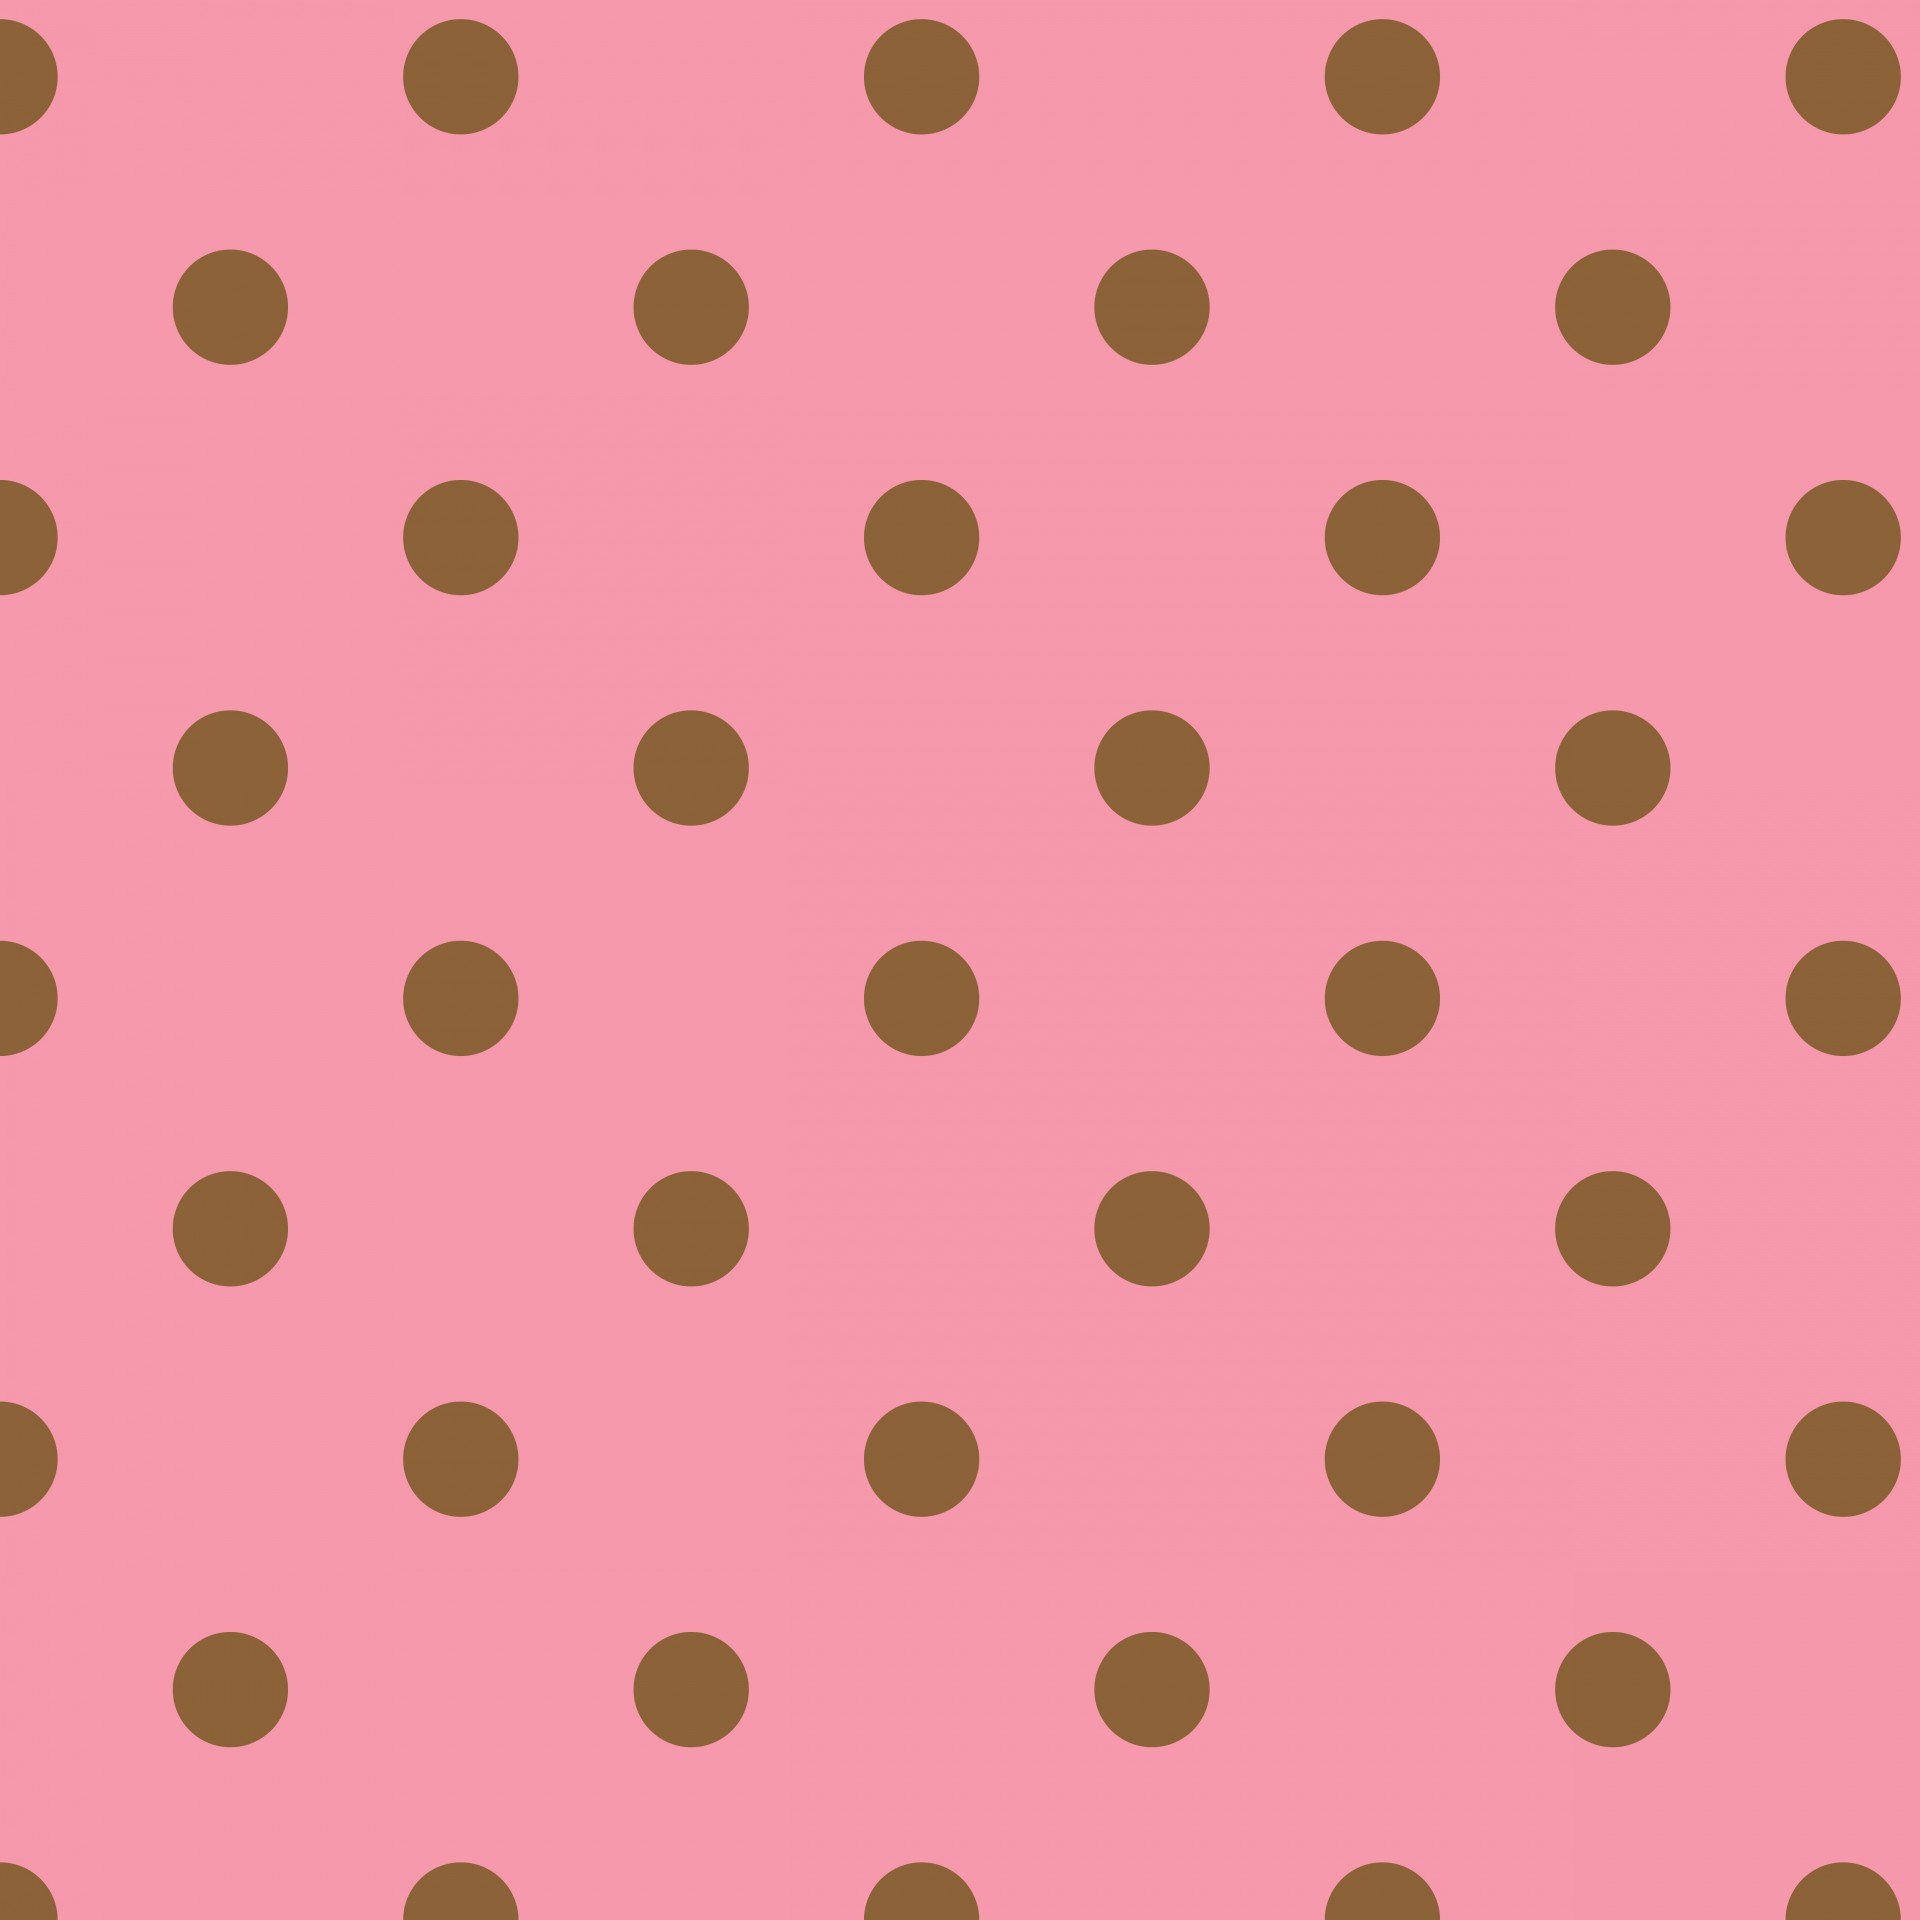 Polka Dots Hintergrund Rosa